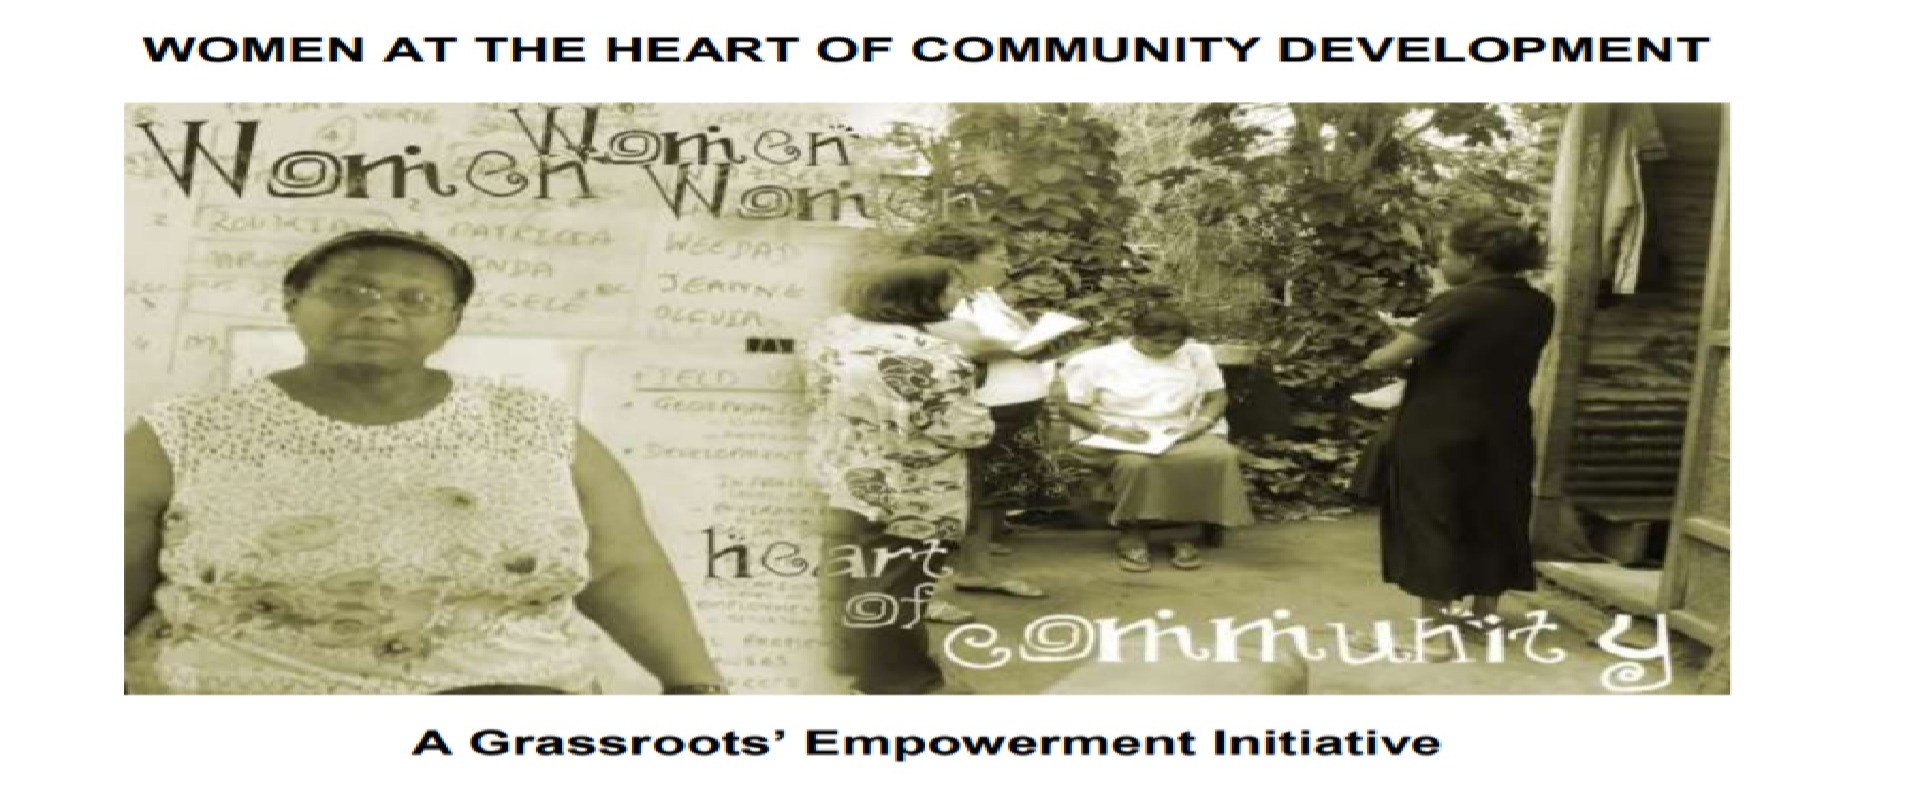 Women at the heart of community development